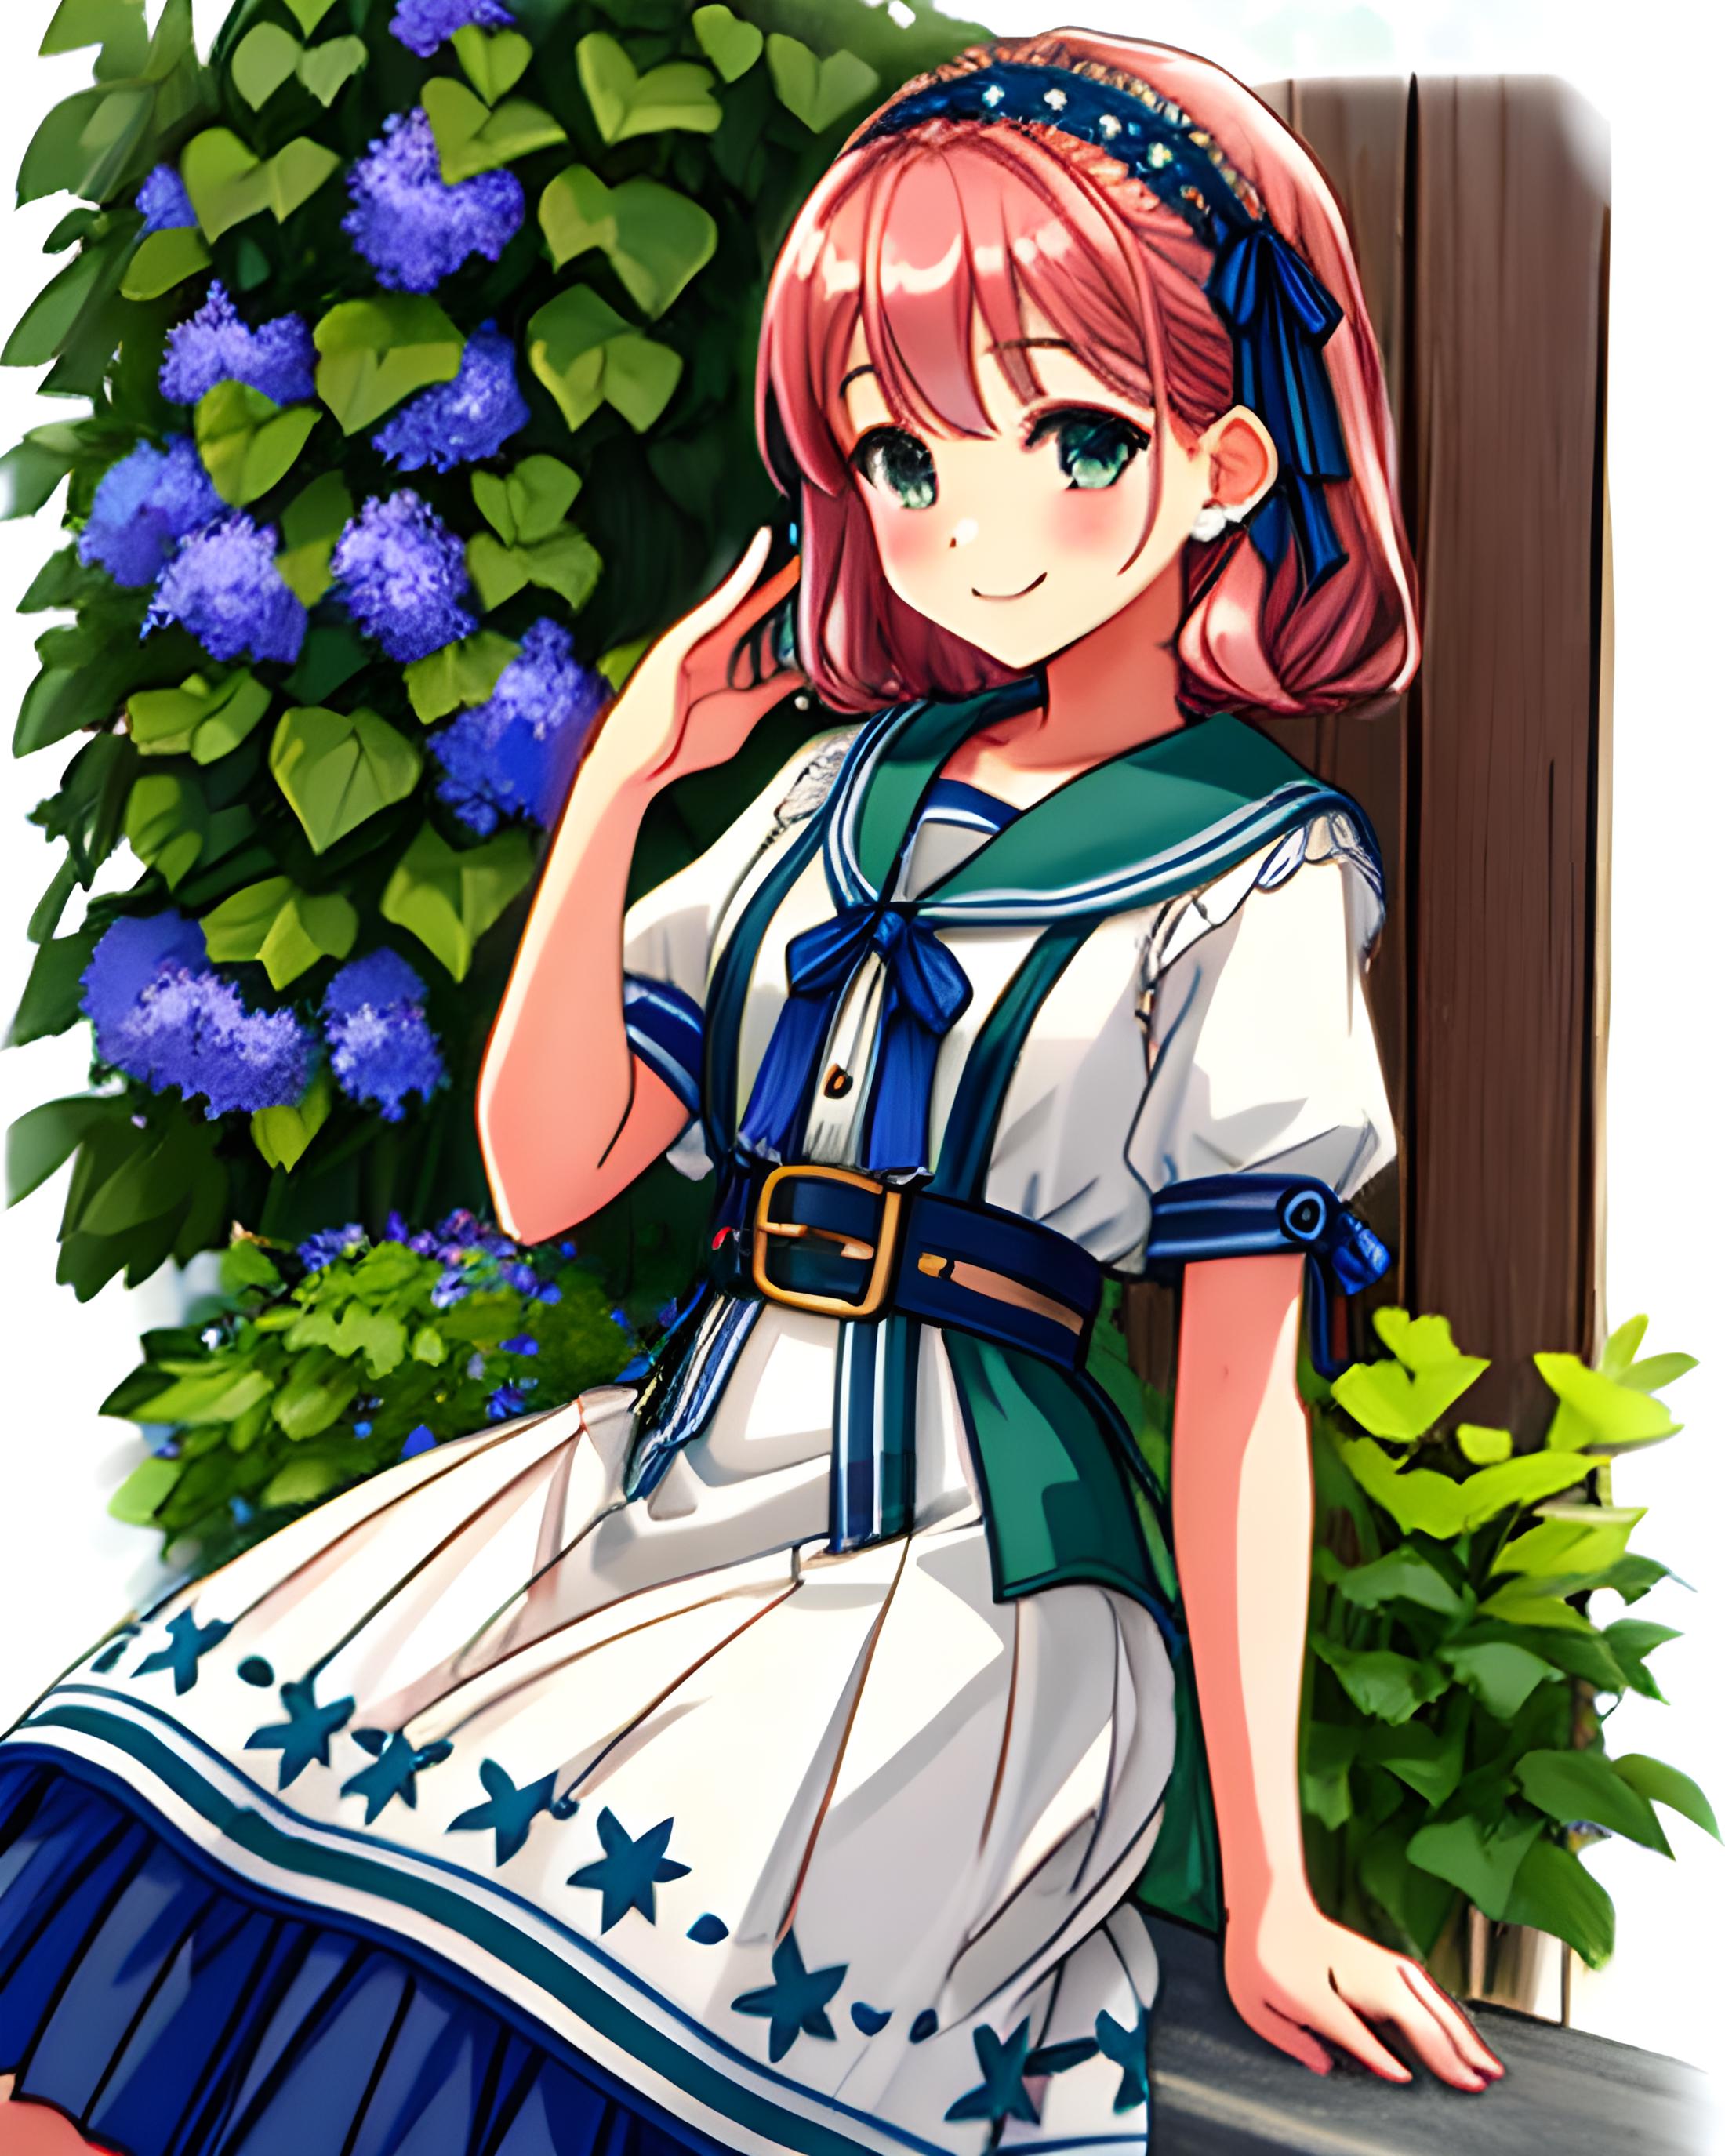 Sailor Dress image by KimiKoro